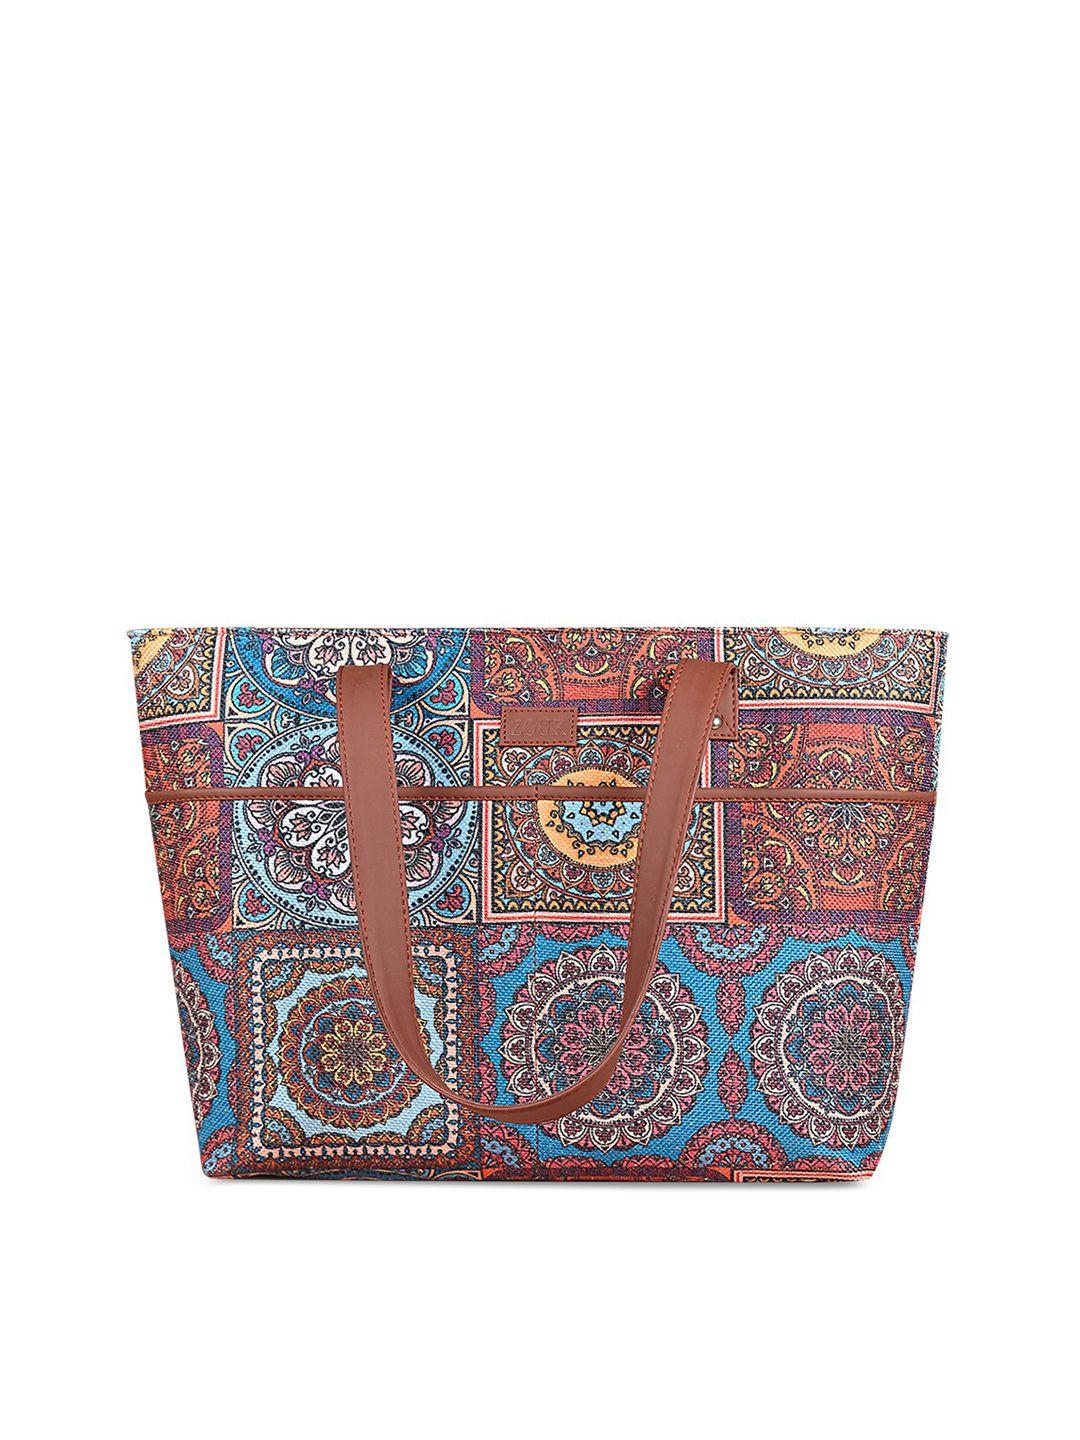 zouk multicoloured ethnic motifs printed shopper tote bag